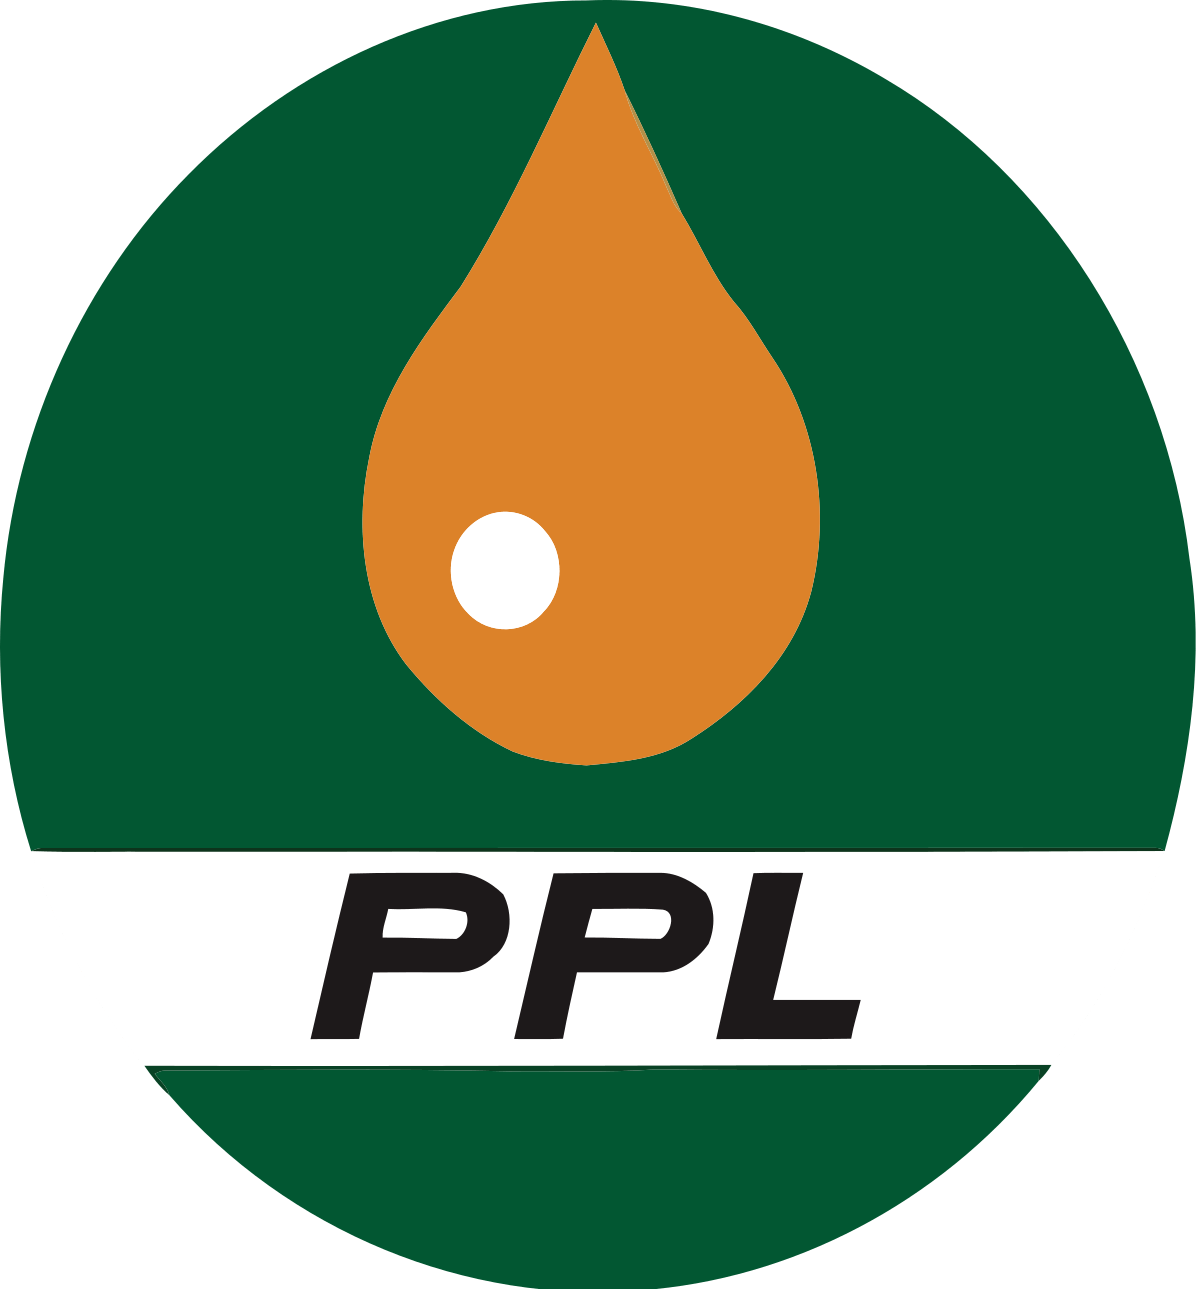 Pakistan_petrolem_logo.svg